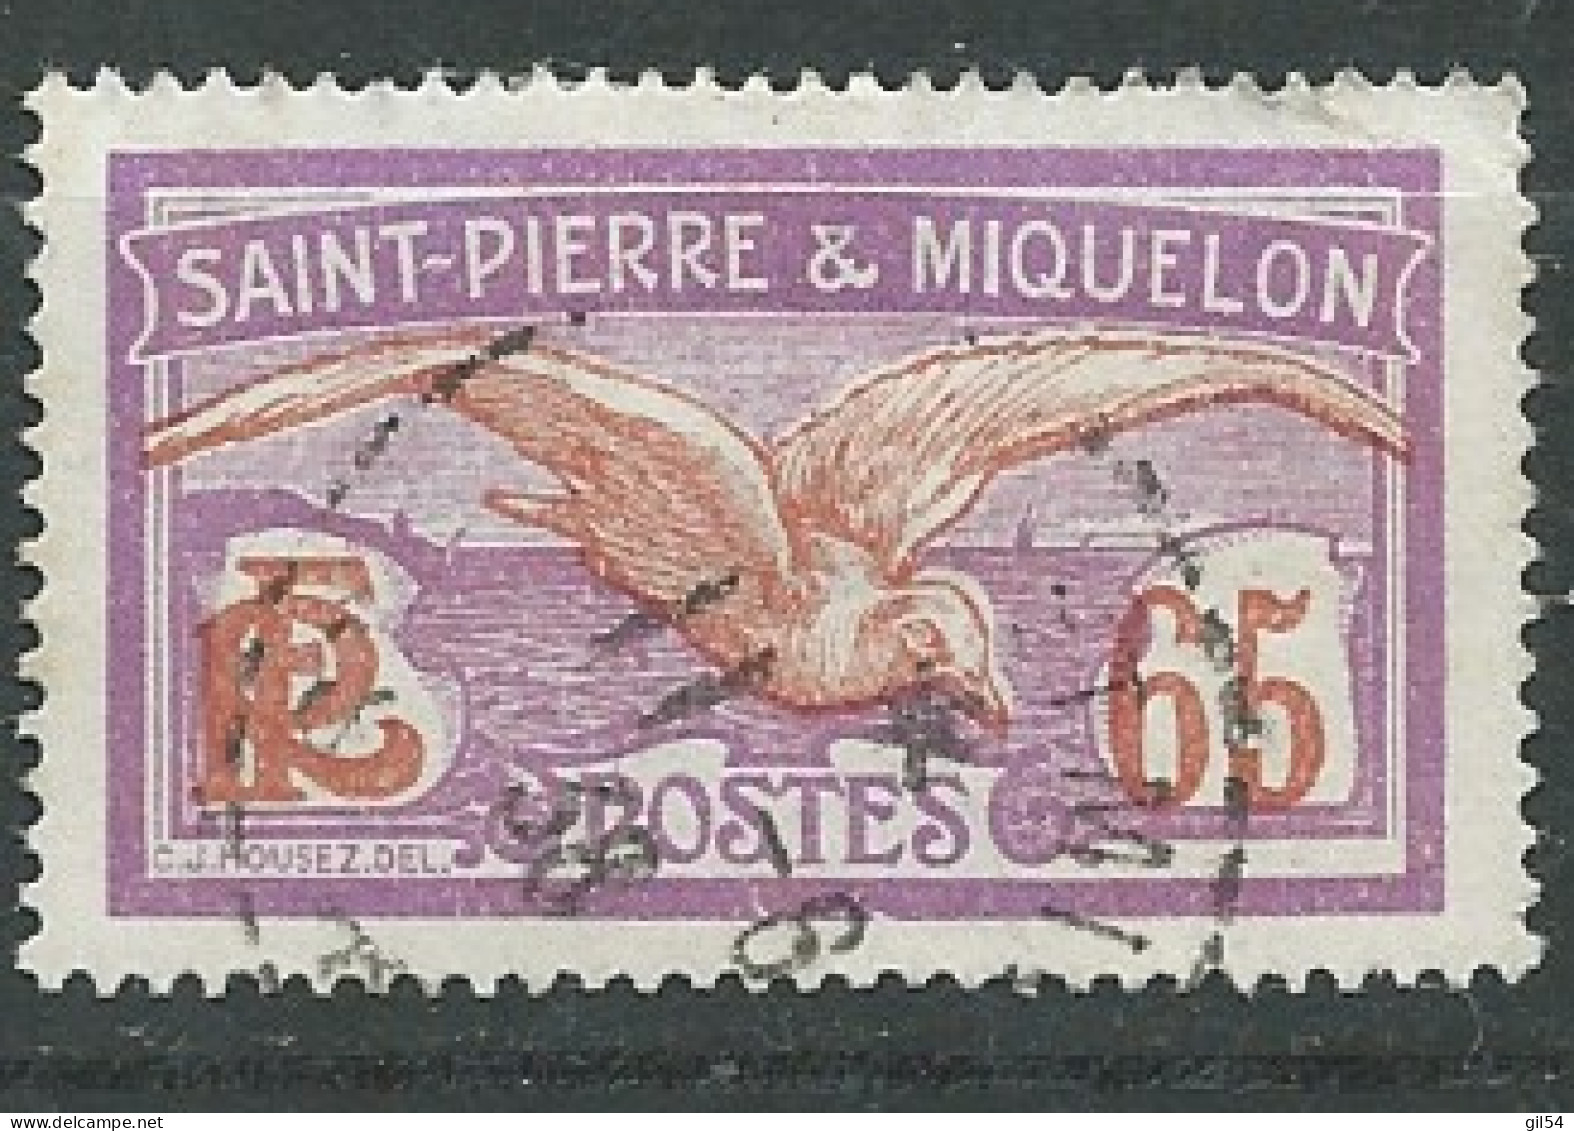 Saint Pierre Et Miquelon )  - Yvert N° 117 Oblitéré       -  Ax 15841 - Gebruikt